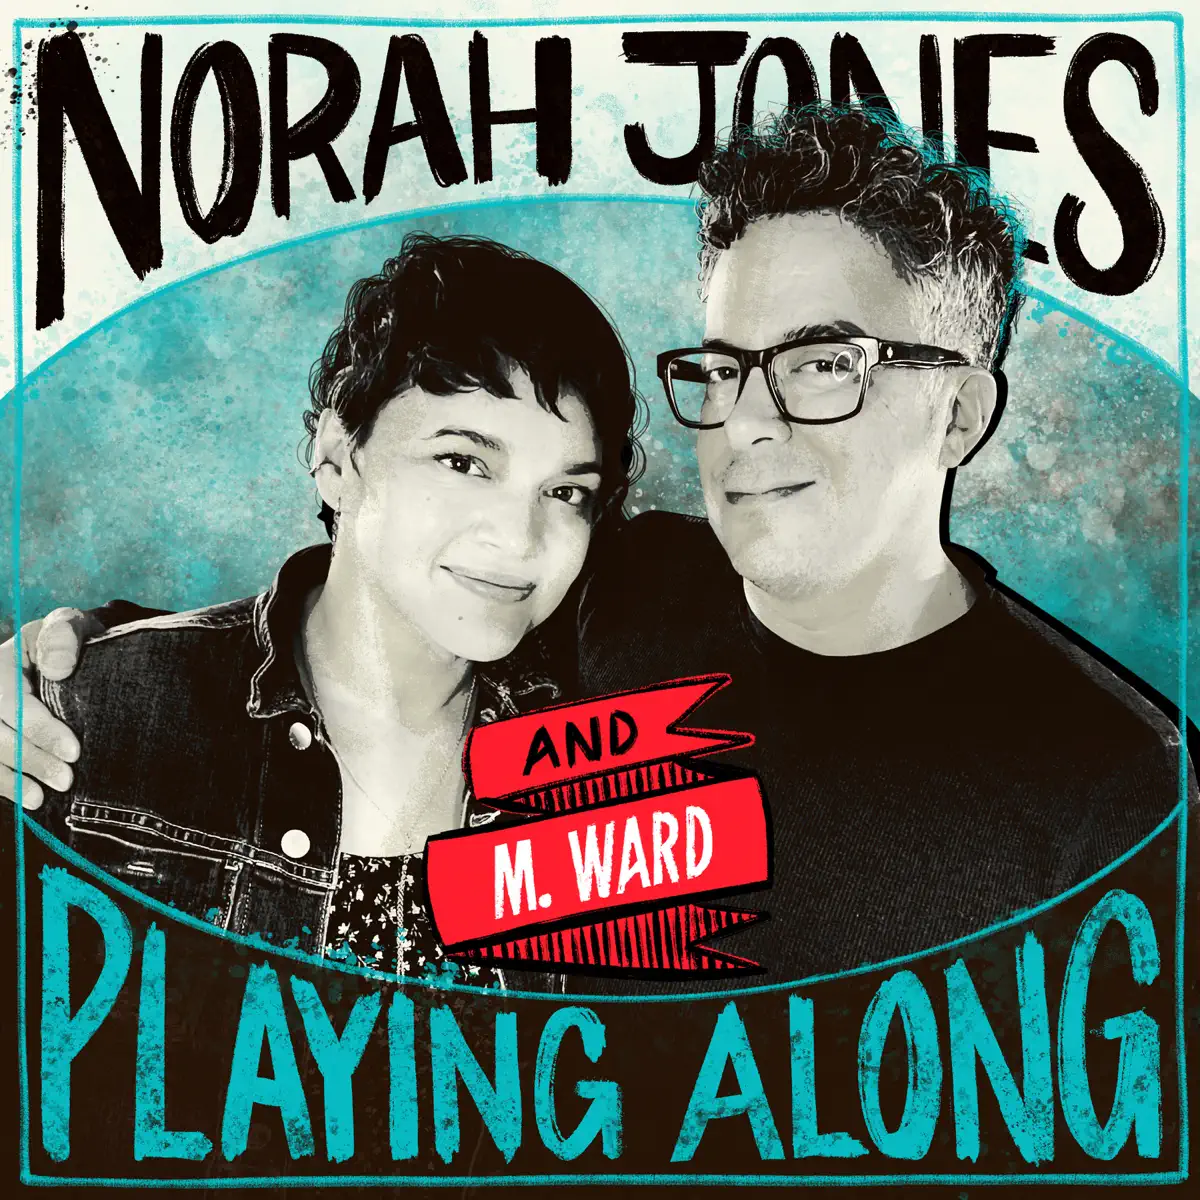 Norah Jones - Lifeline (From 「Norah Jones is Playing Along」 Podcast) [feat. M. Ward] - Single (2023) [iTunes Plus AAC M4A]-新房子